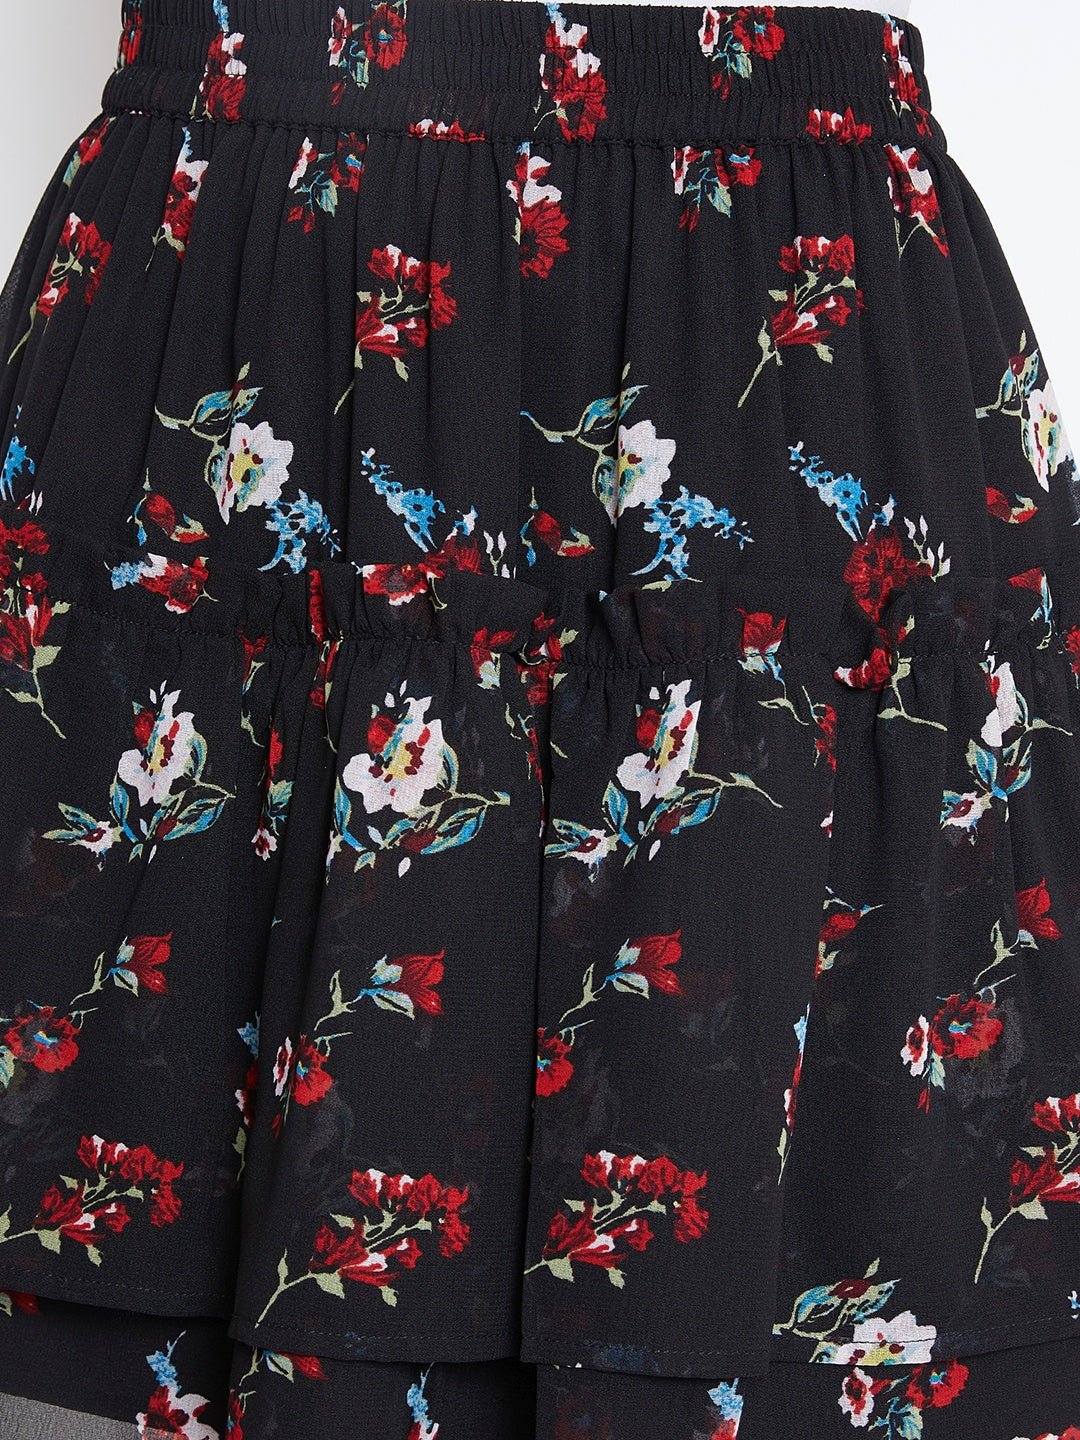 Folk Republic Women Black & Red Floral Print Layered Slip-On Mini Skirt - #folk republic#